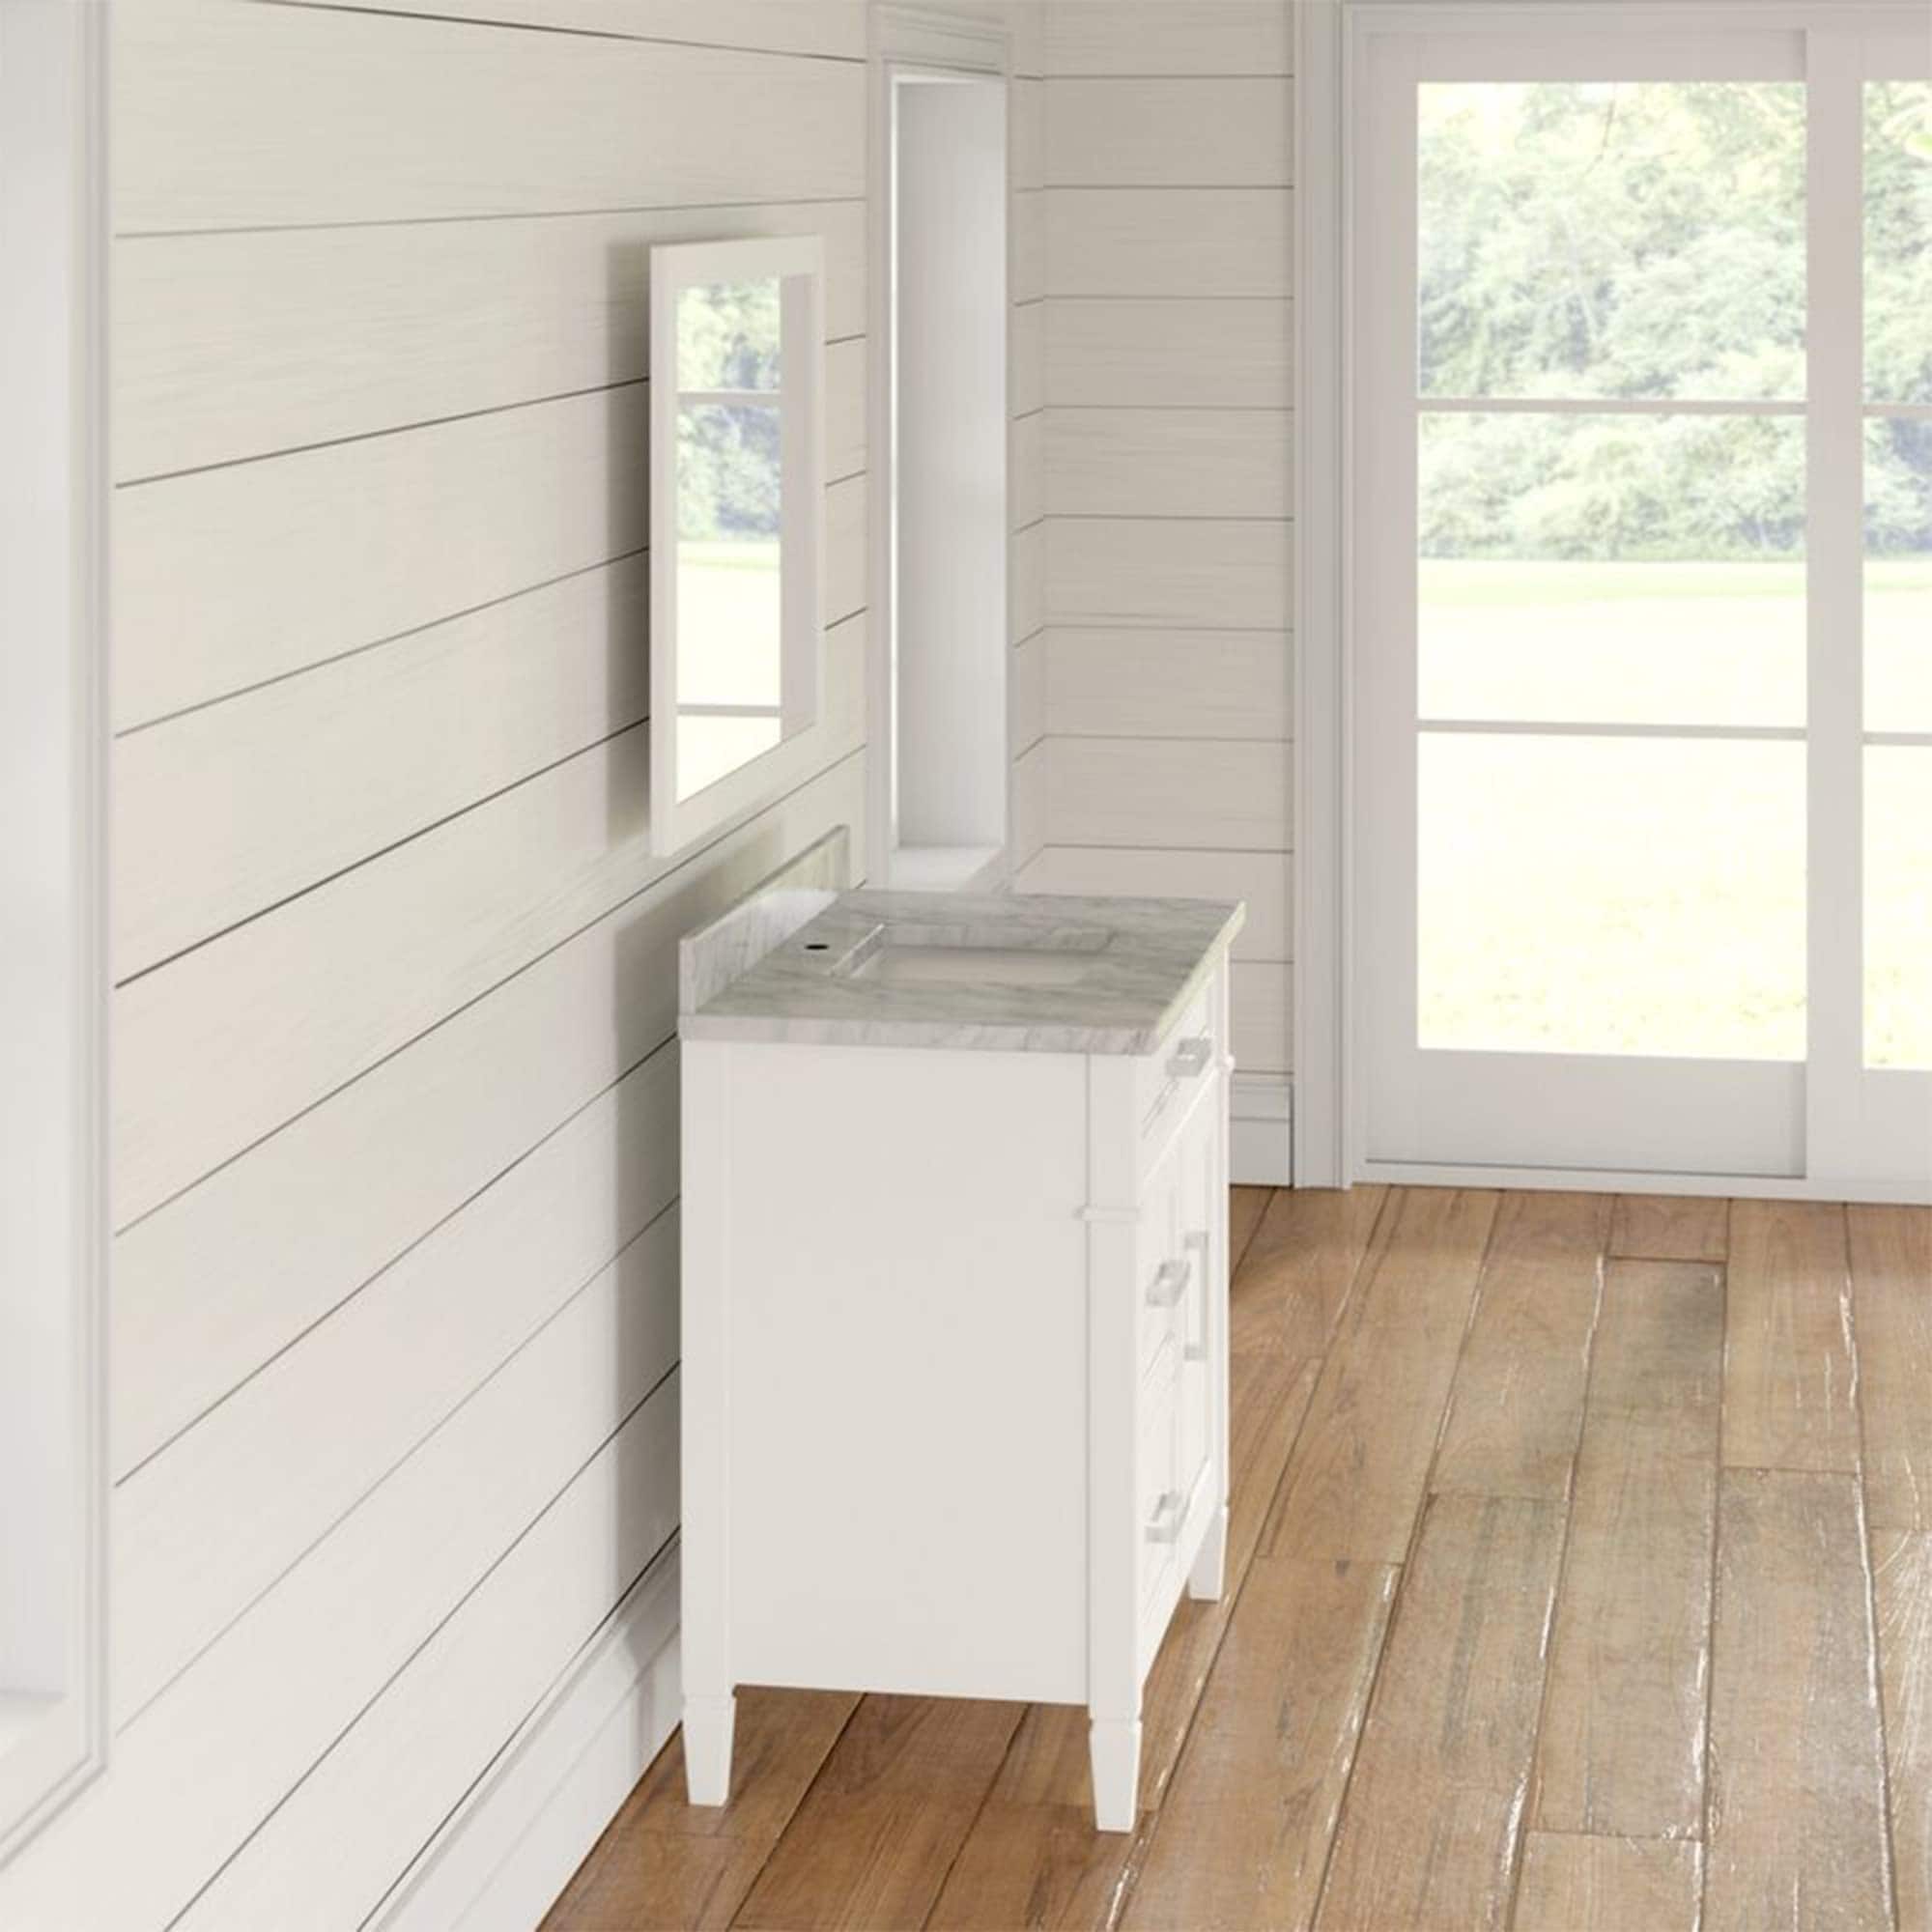 Isla 36 Single Bathroom Vanity Set with Carrara White Marble Countert –  Altair Design USA